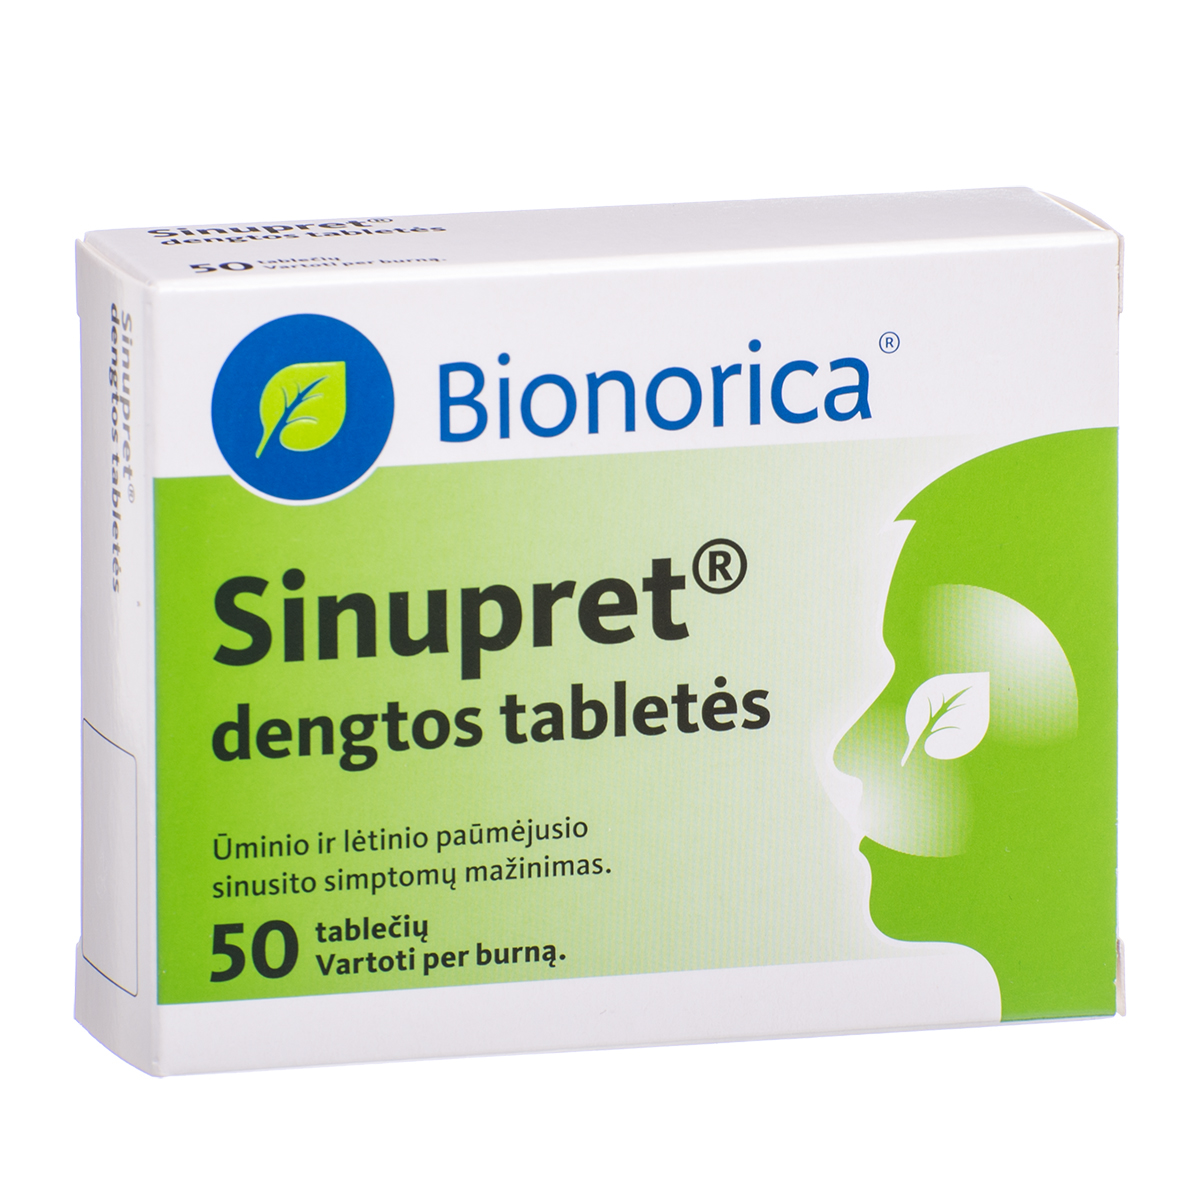 SINUPRET, dengtos tabletės, N50